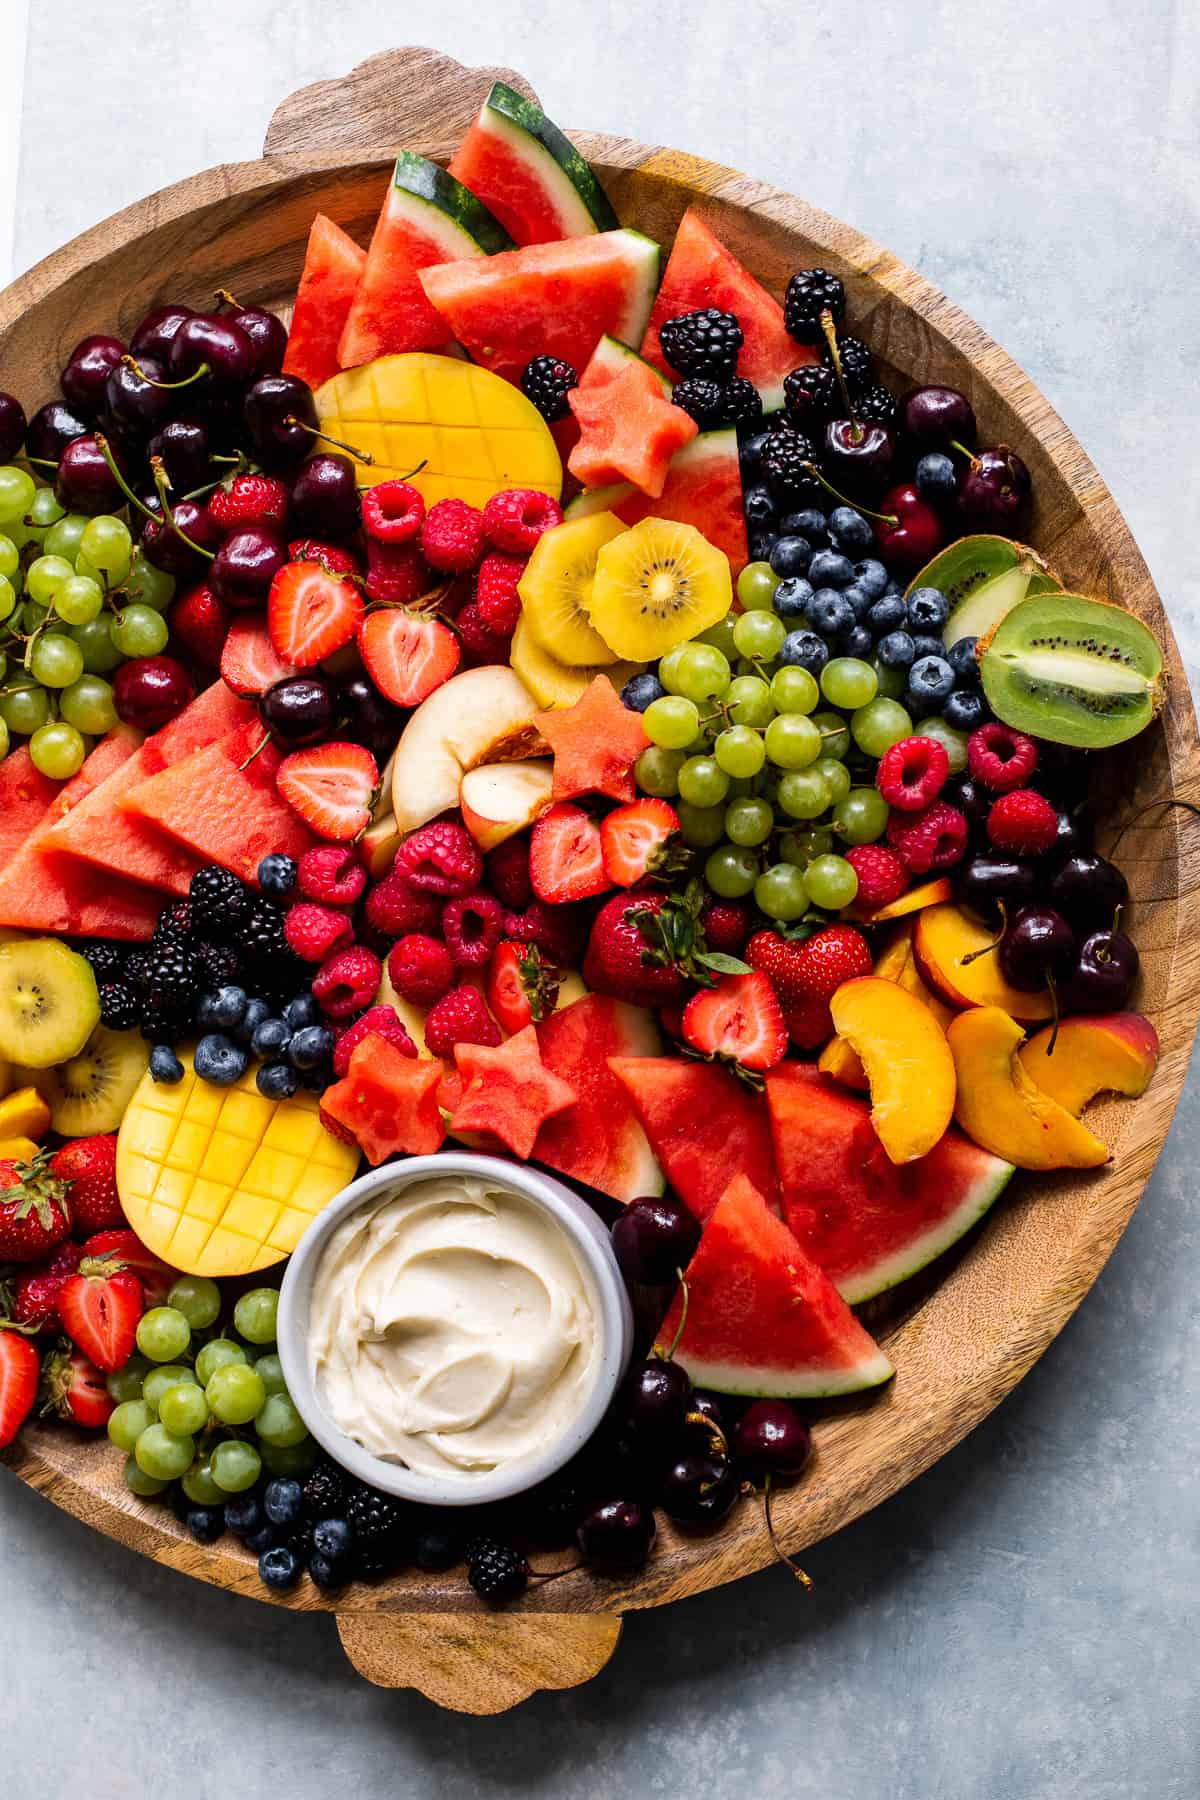 Vegetable And Fruit Platter Ideas